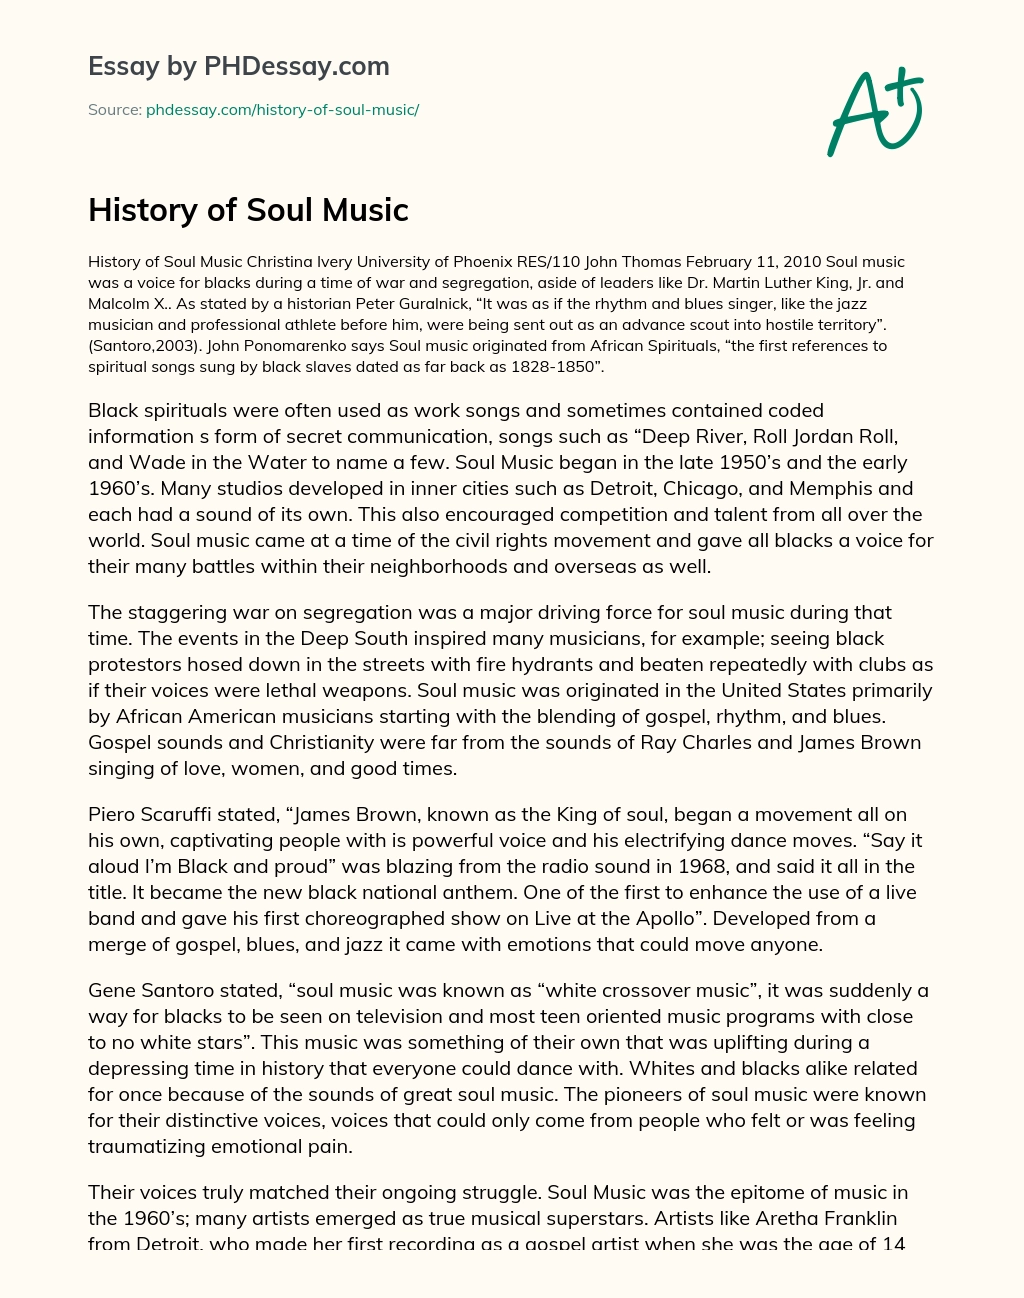 History of Soul Music essay